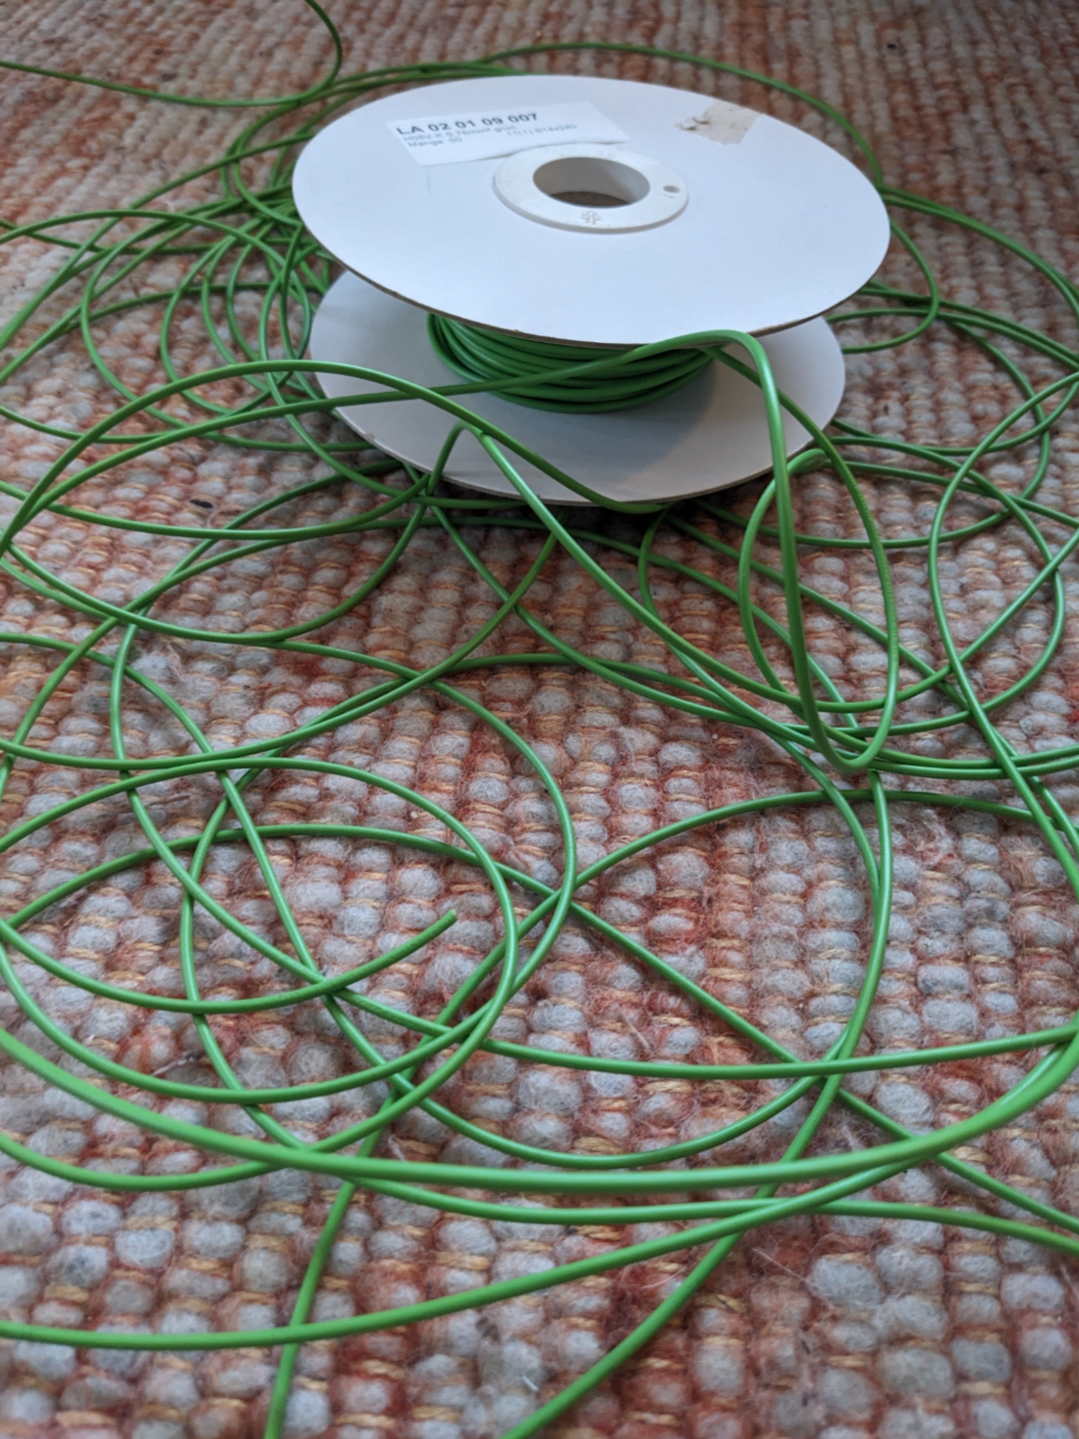 Green wire spread across a carpet.